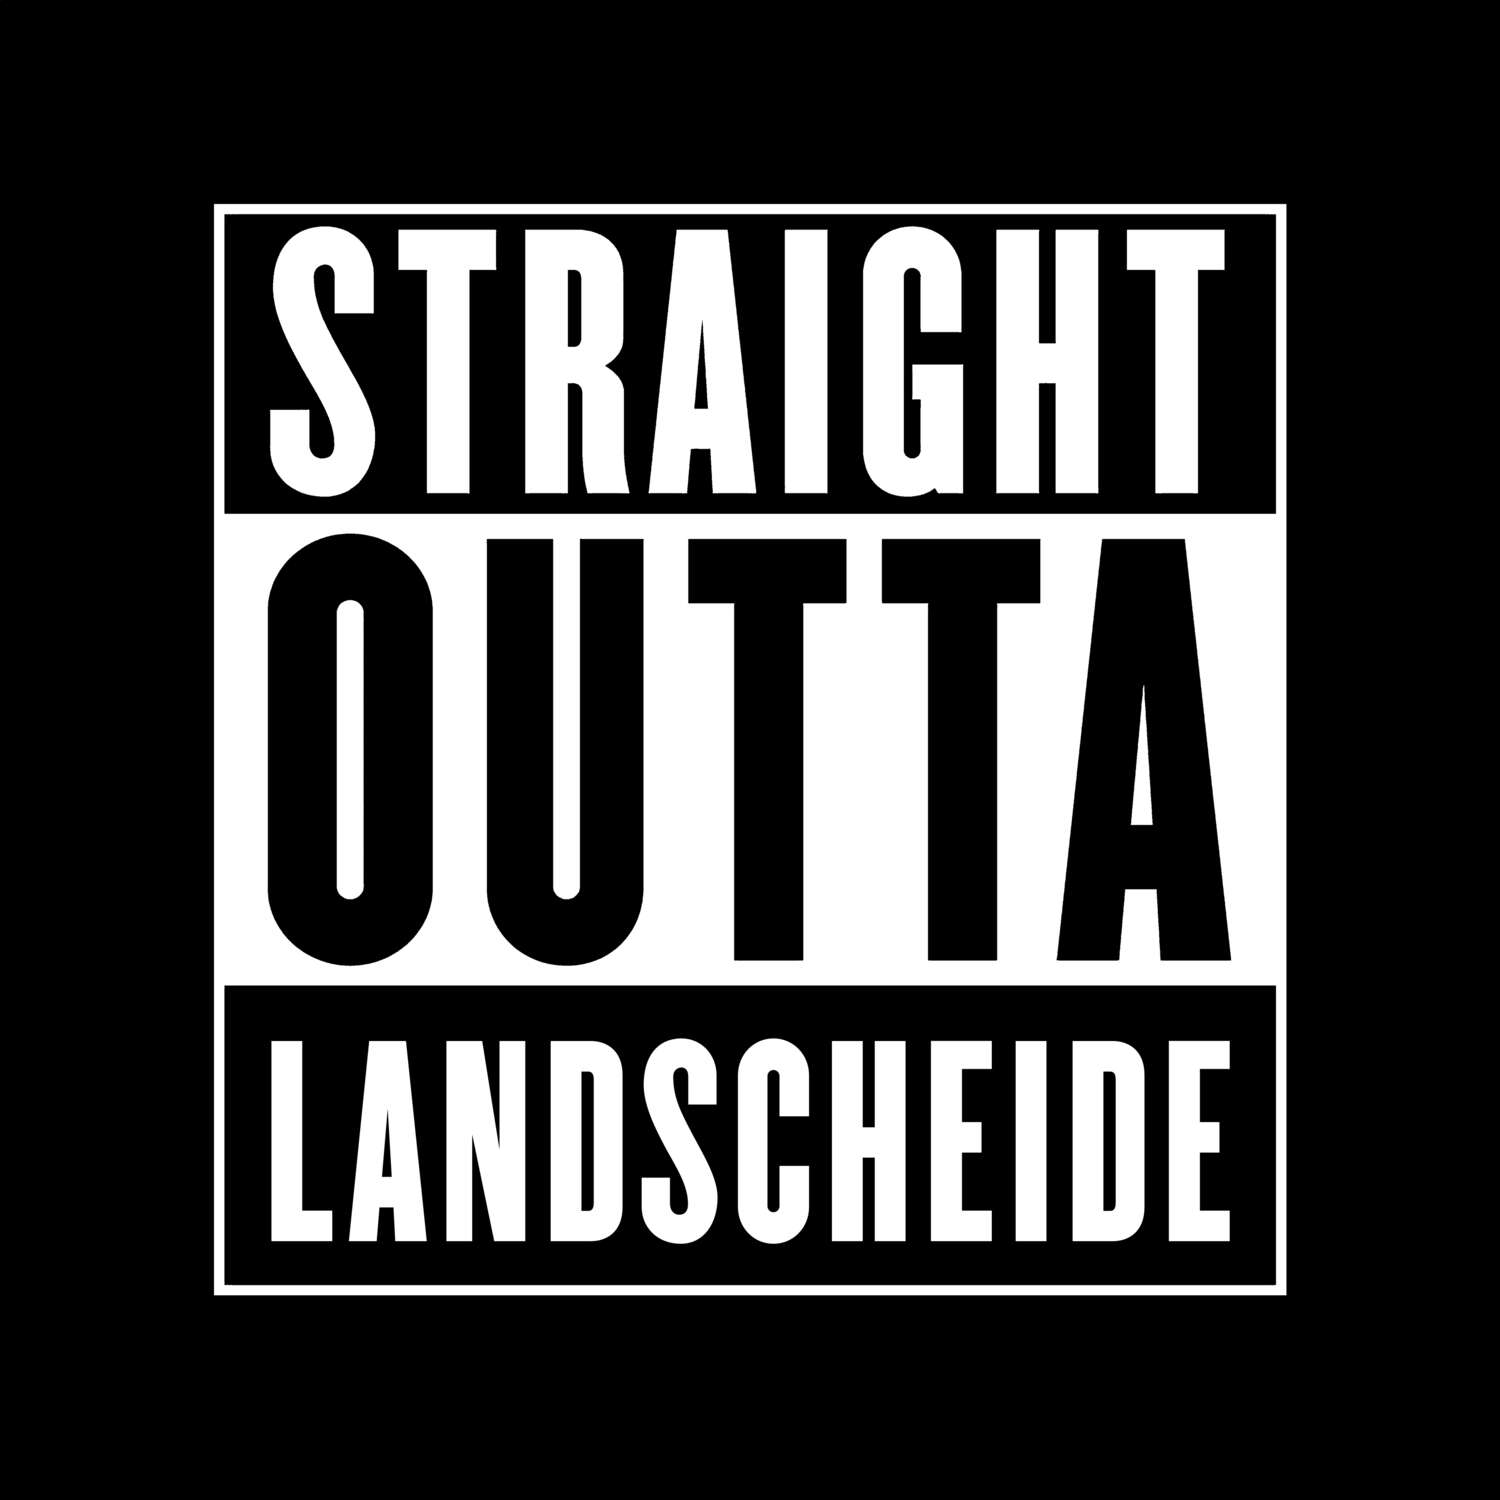 Landscheide T-Shirt »Straight Outta«